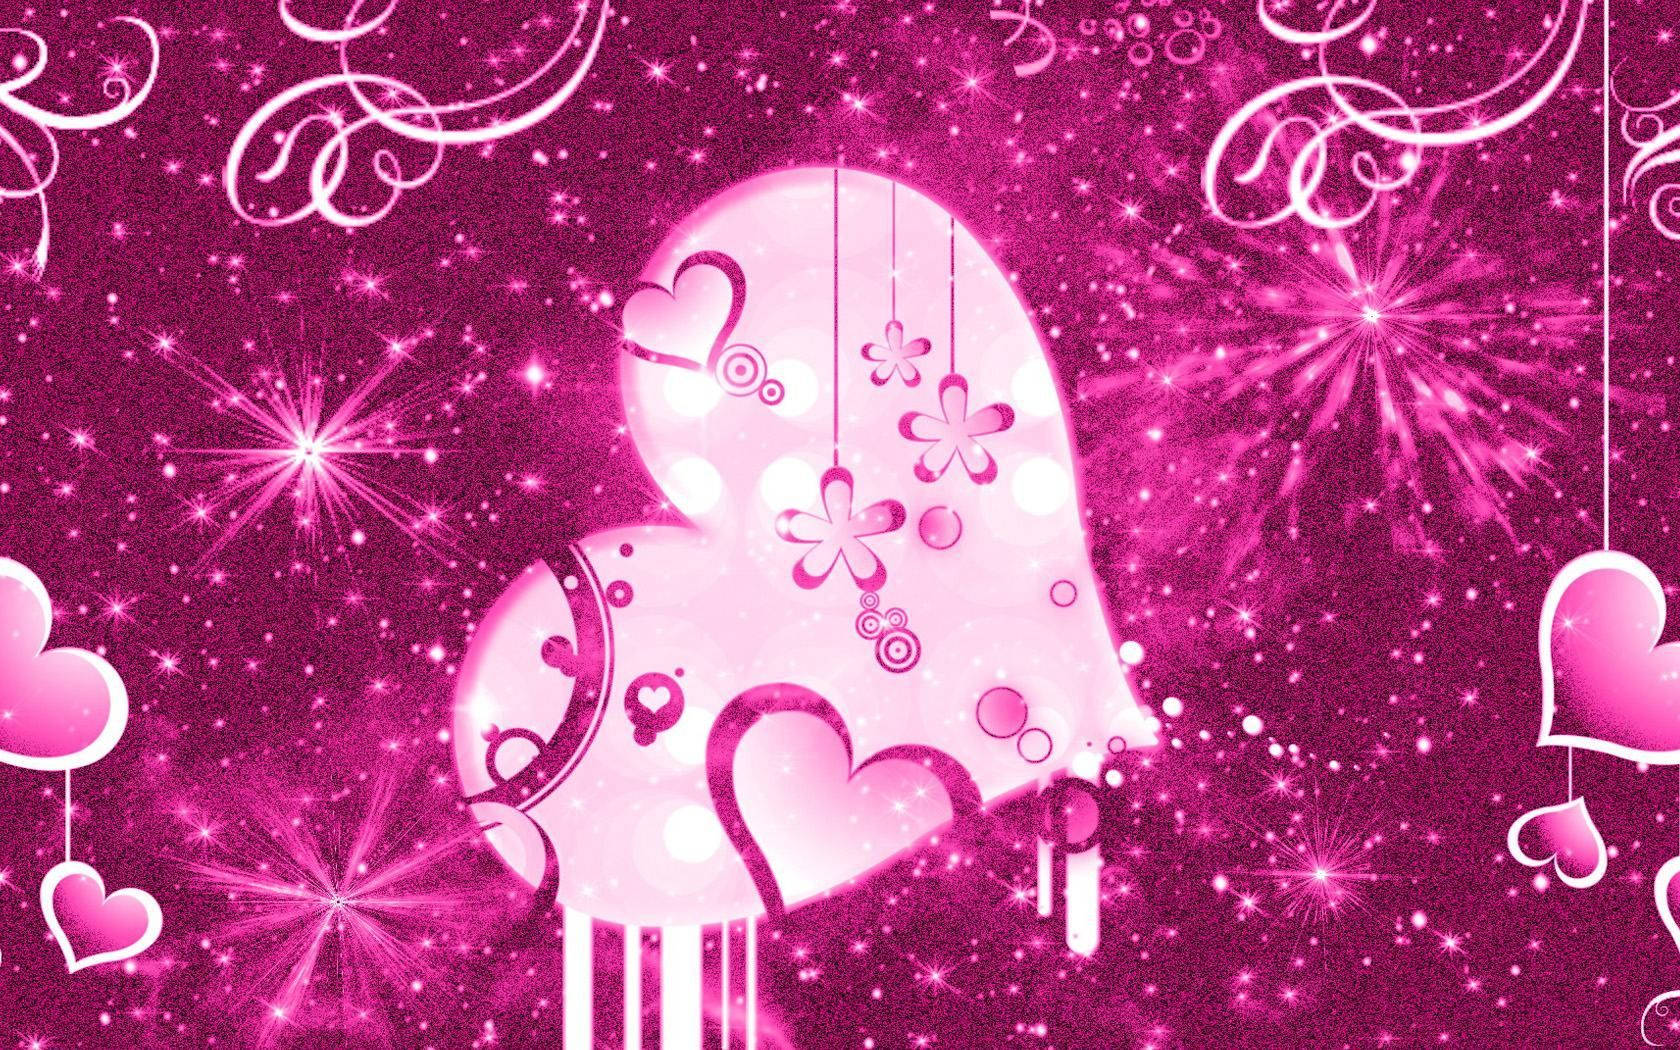 Spread Love With Girly Purple Glitter Hearts Wallpaper